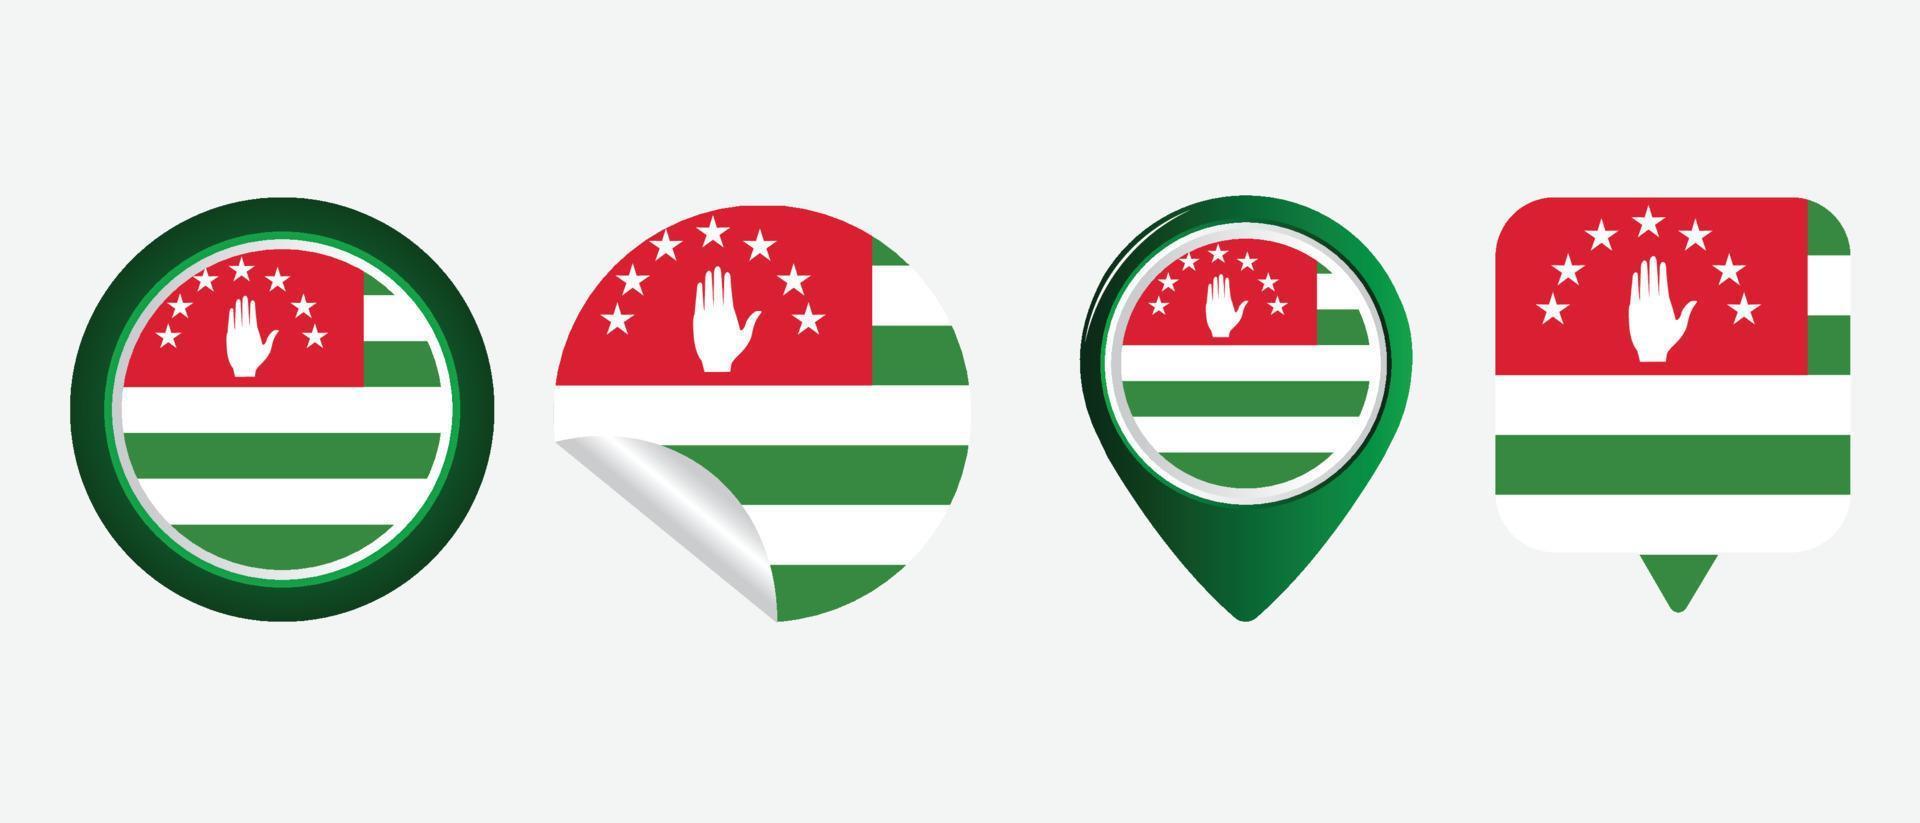 Abkhazia flag. flat icon symbol vector illustration